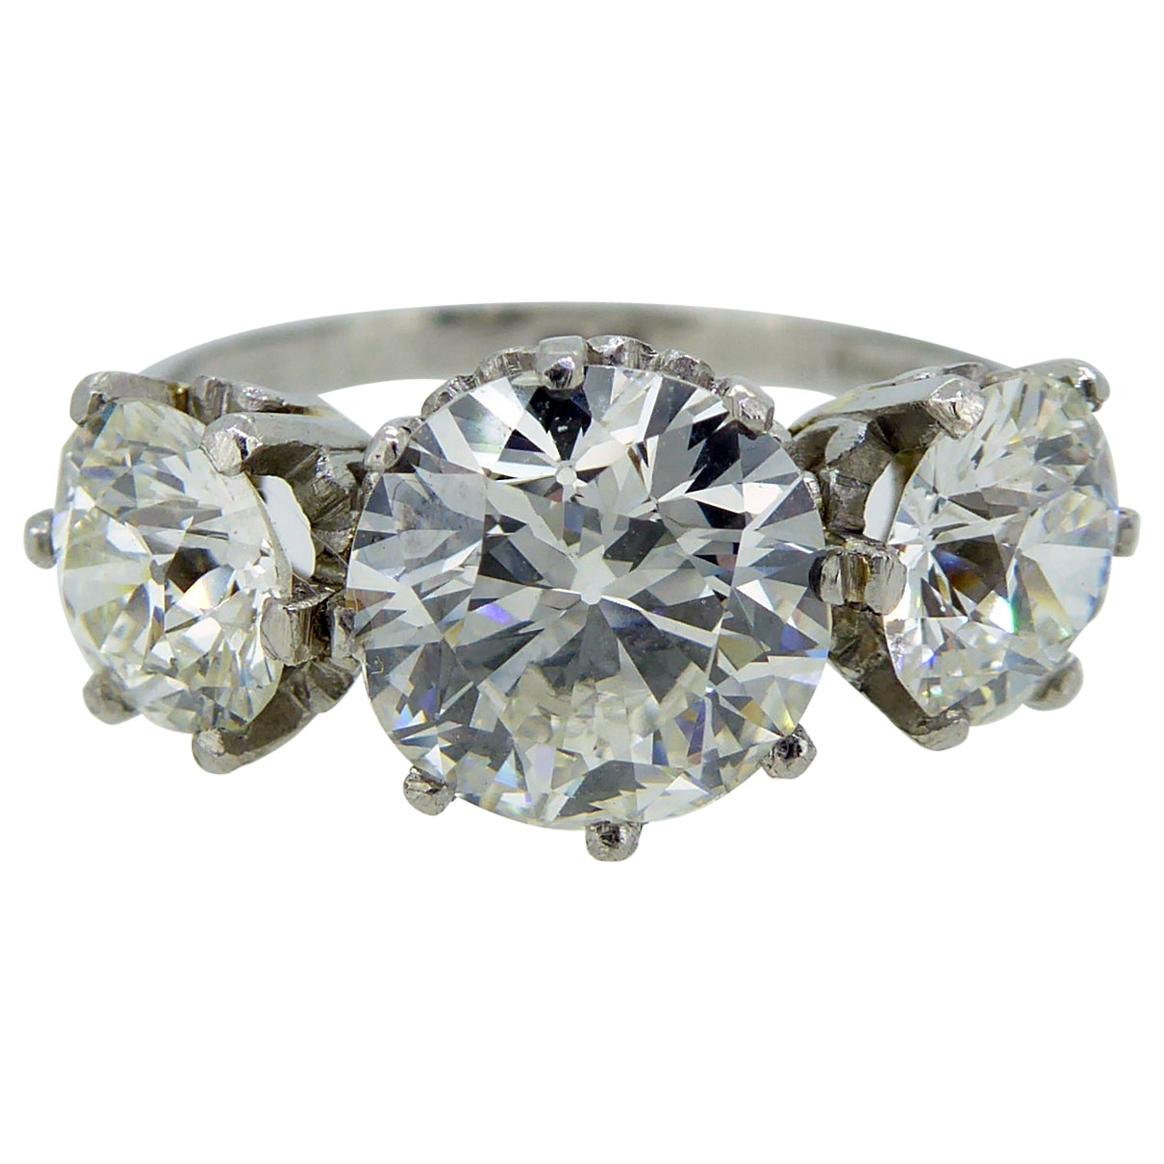 Vintage 3.09 Carat Diamond Ring, Three-Stone Setting, Platinum, circa 1940s